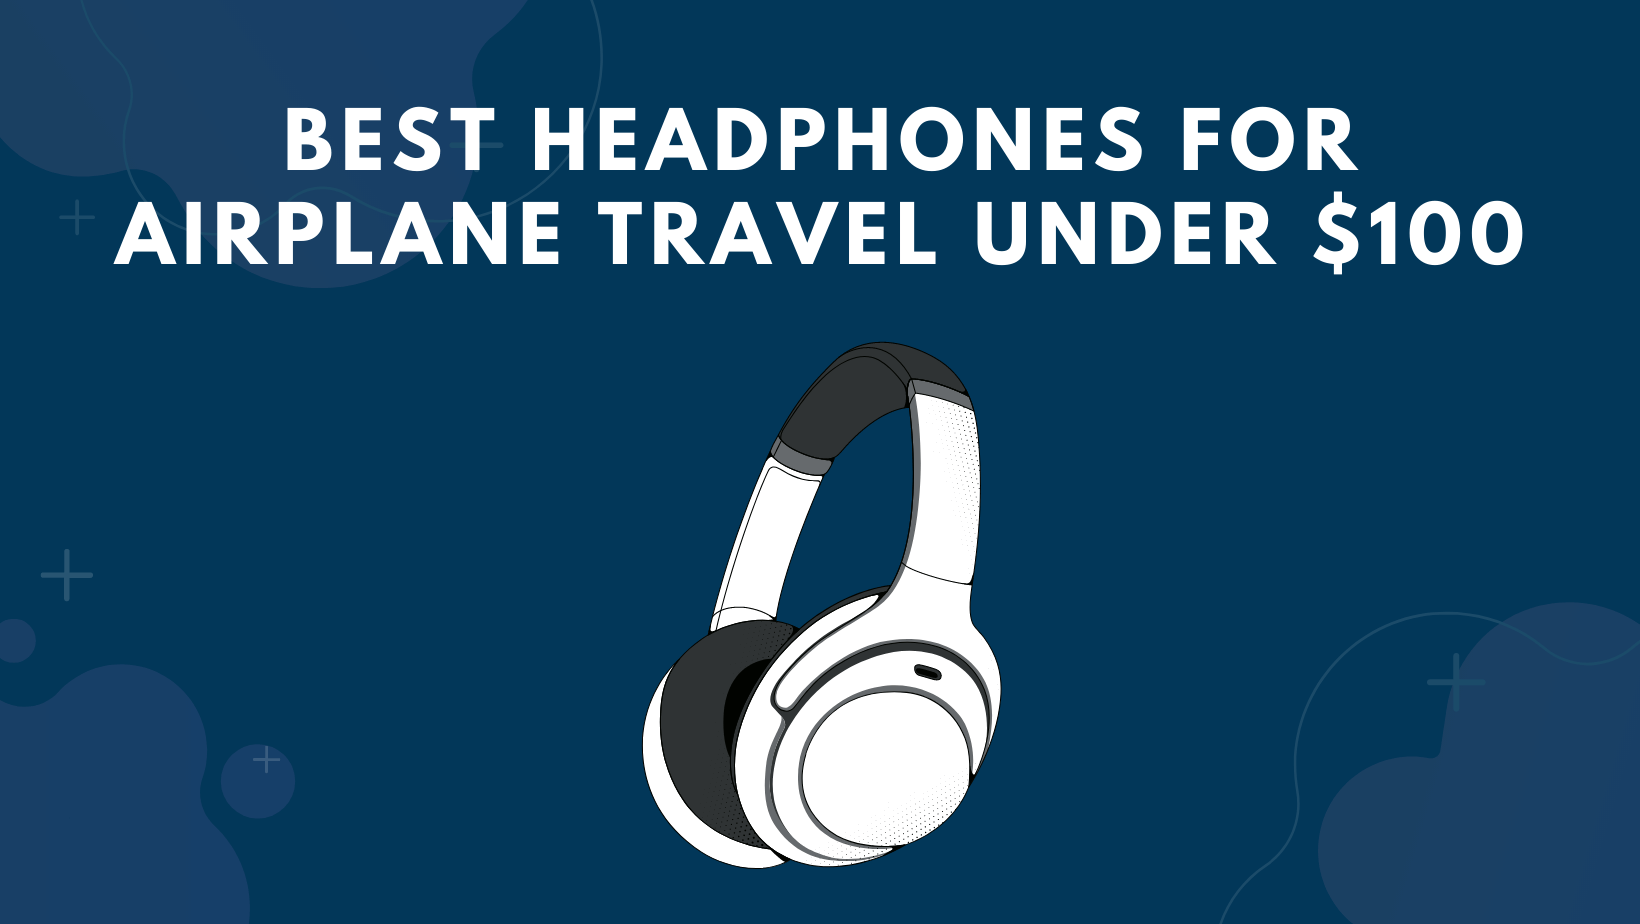 Best Headphones for Airplane Travel Under $100